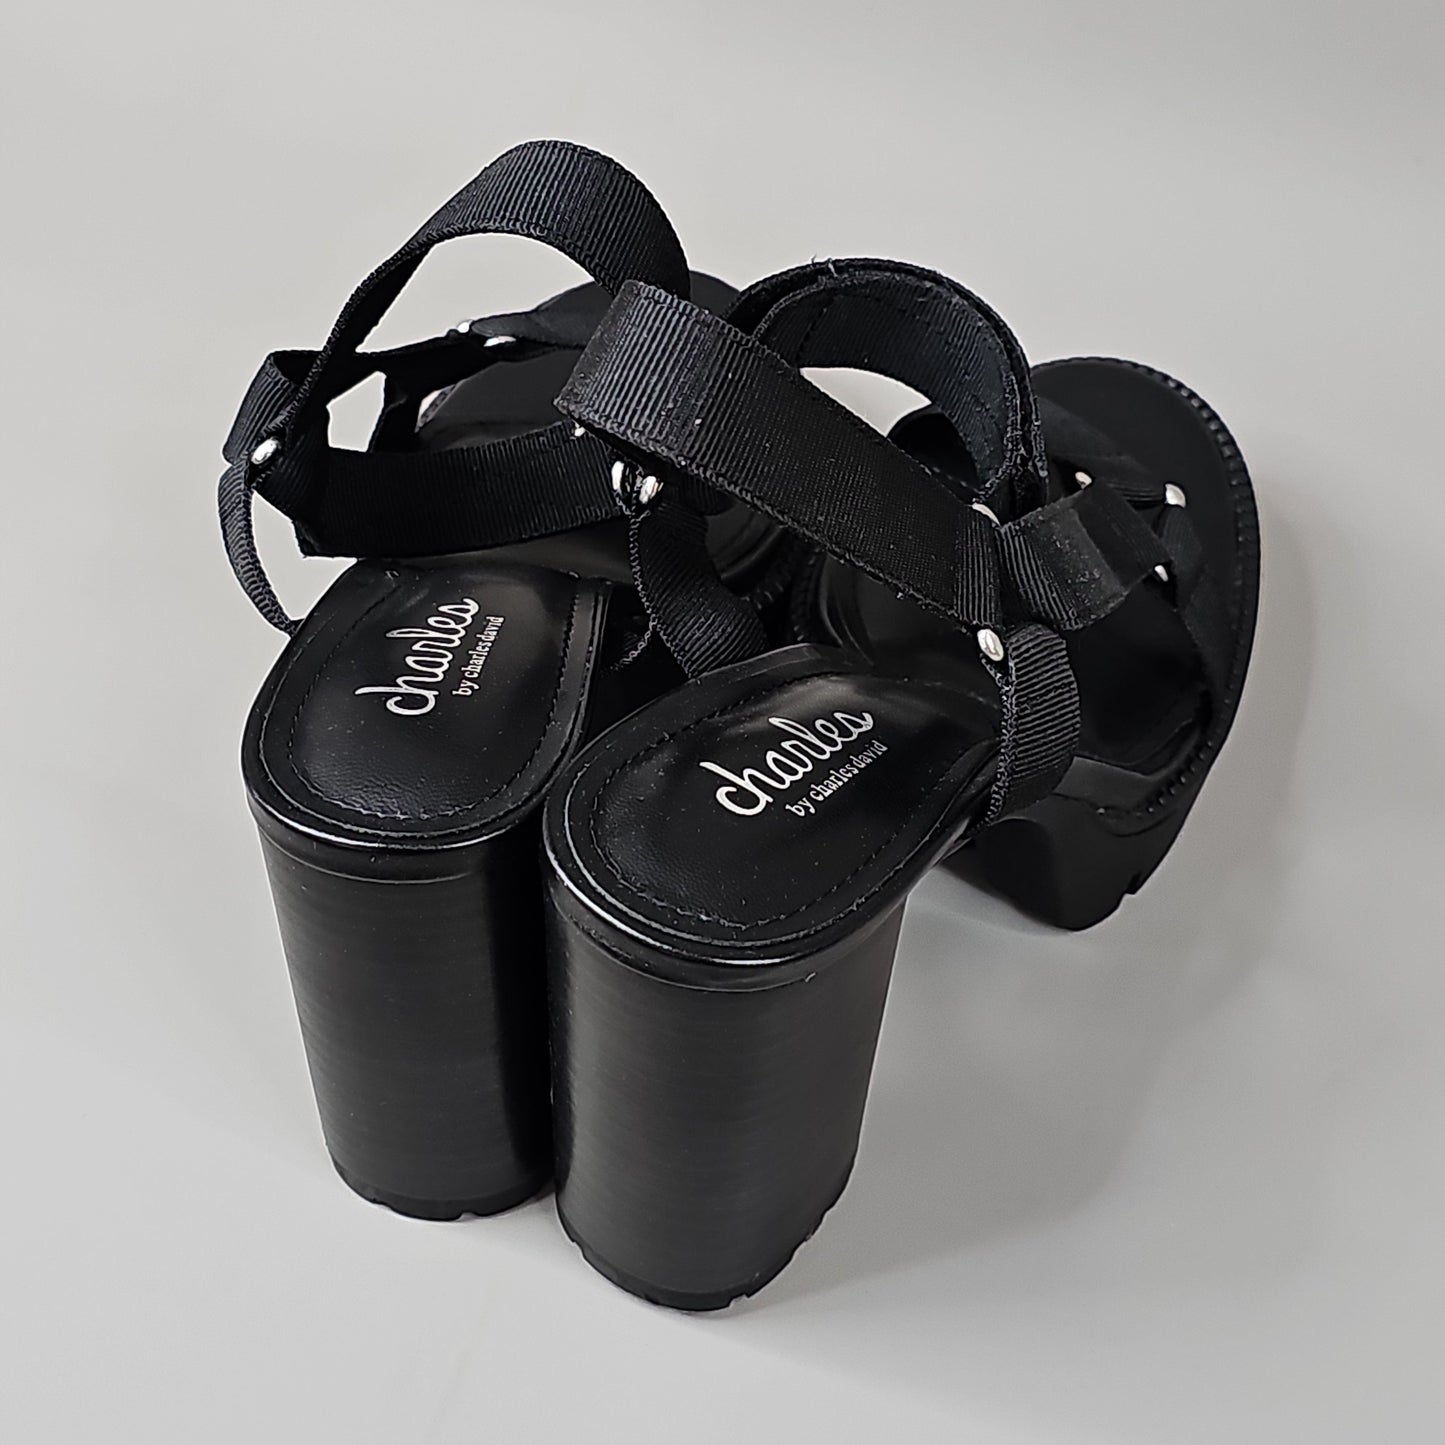 CHARLES BY CHARLES DAVID Women's Vast Sport Sandal Shoe Sz 8.5 M Black (New)